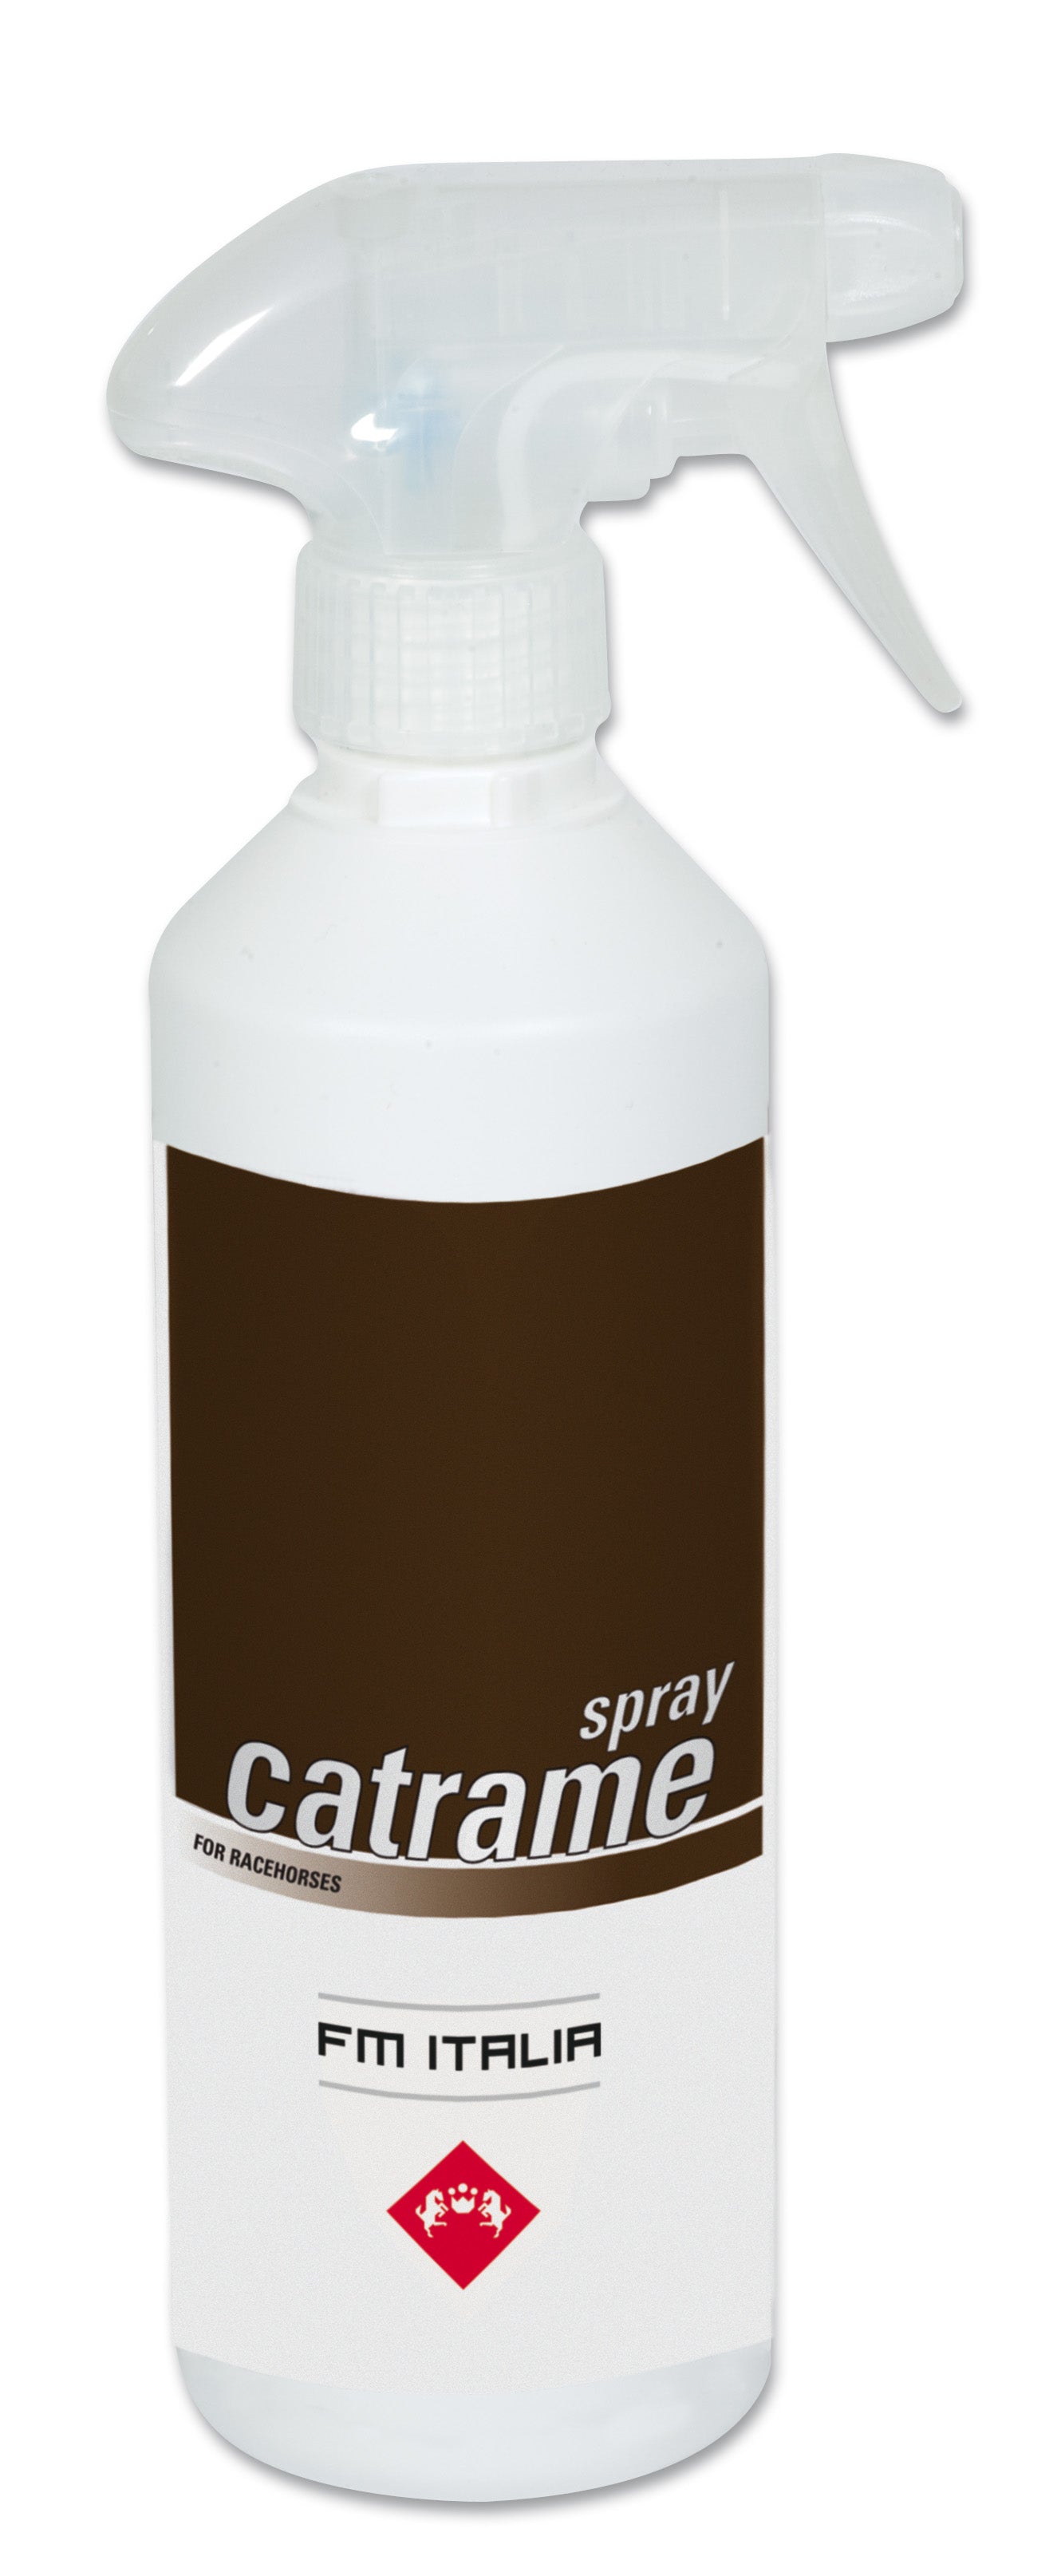 Catrame Spray | Pine Tar Waterproofing for Horse Hooves